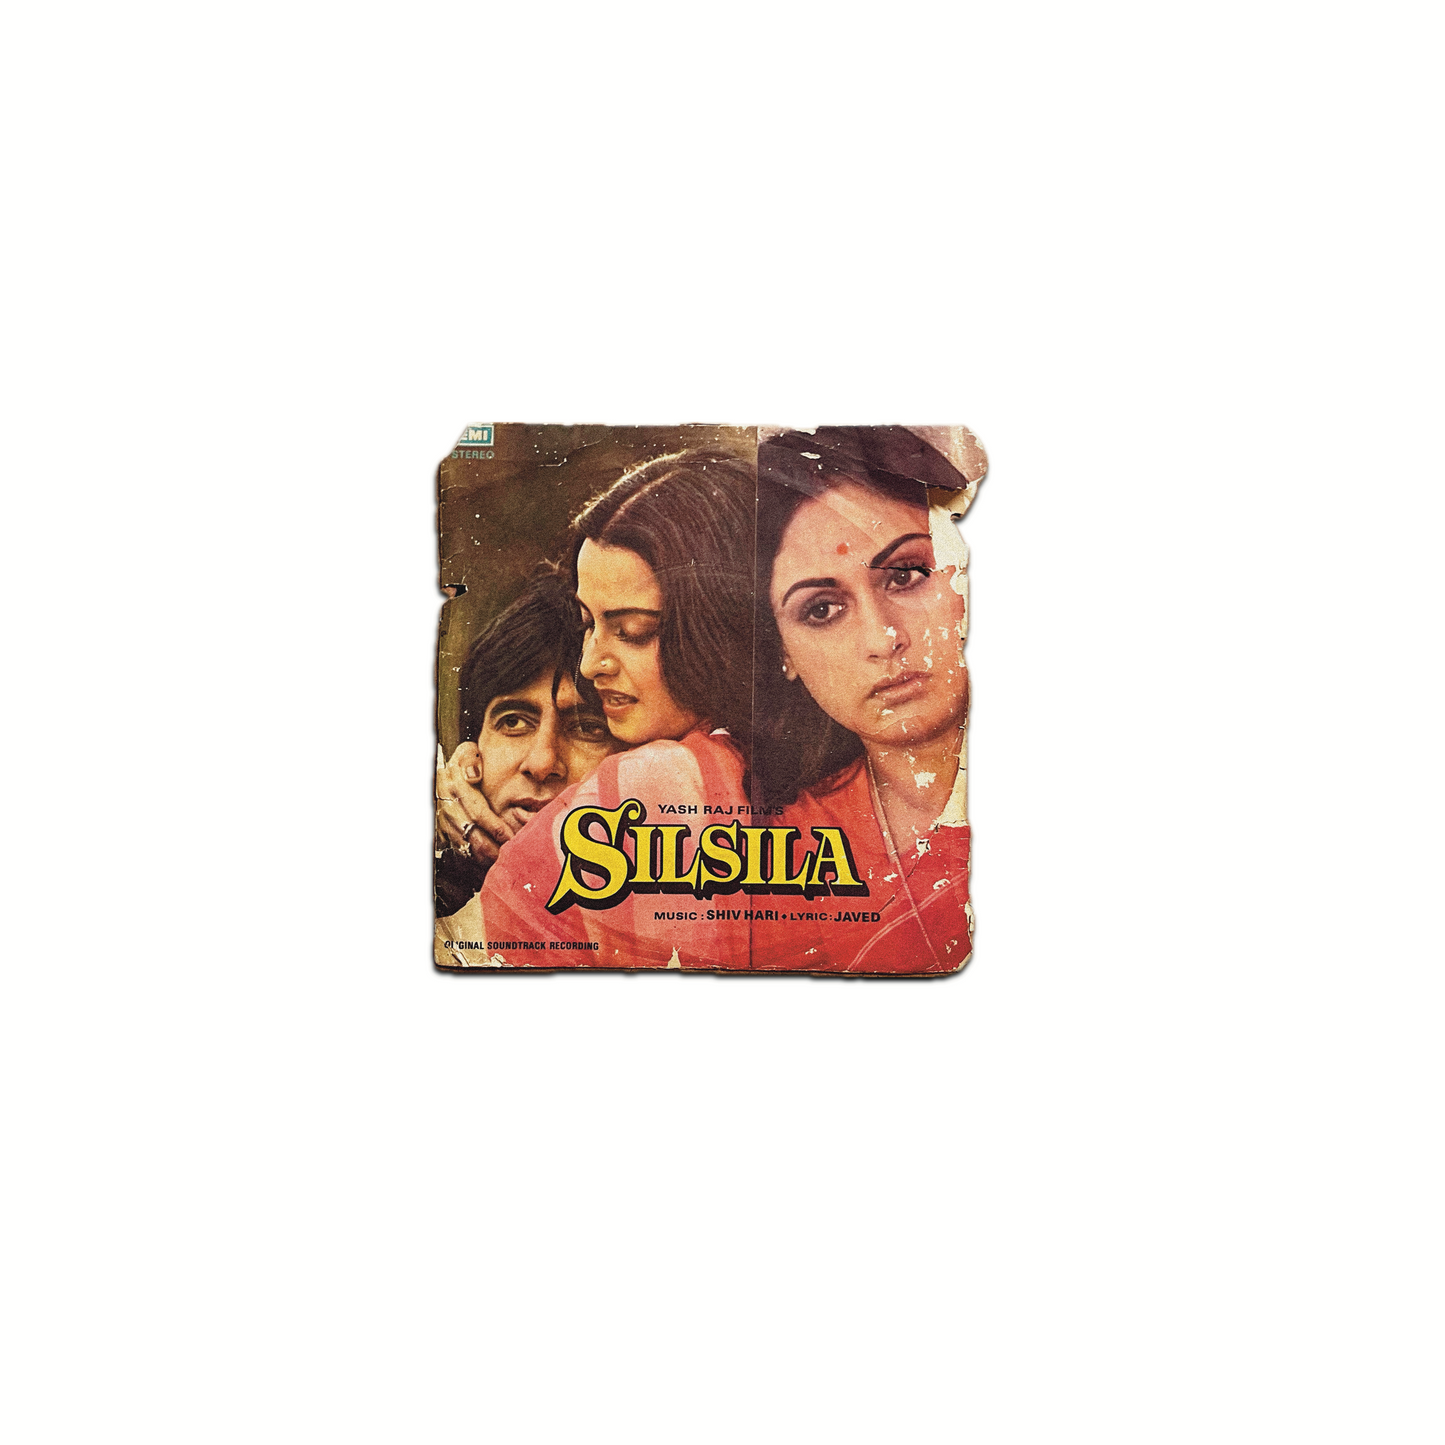 'SILSILA' -  VINTAGE VINYL LP RECORD COVER 1981